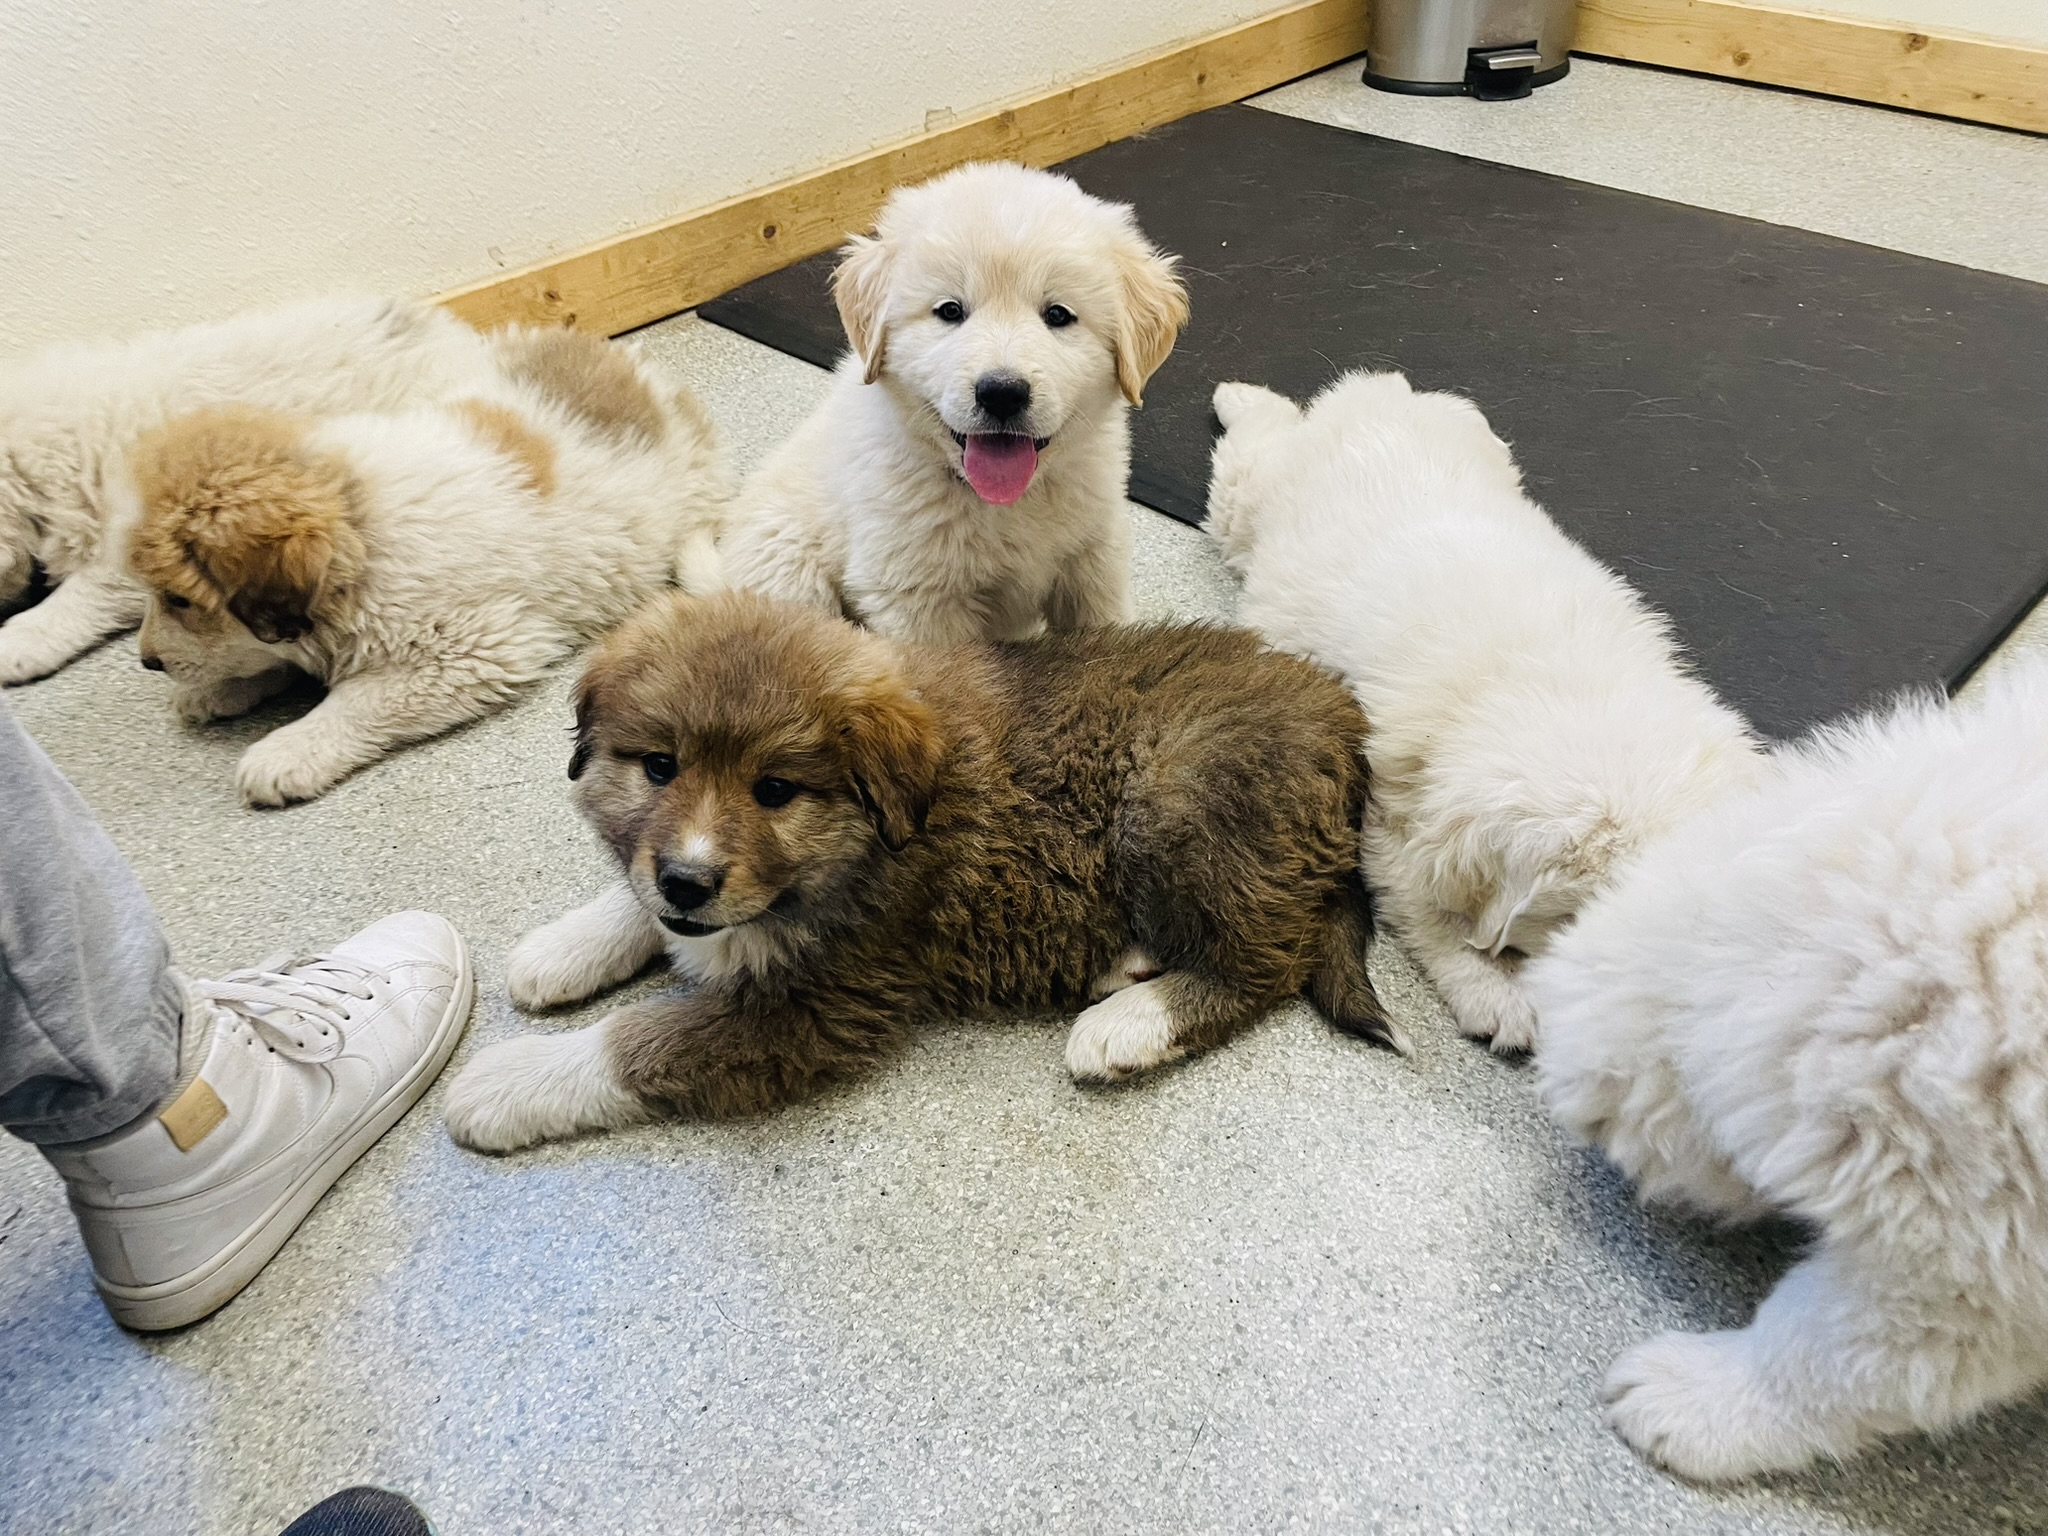 Colorado mountain dog puppies first vet visit